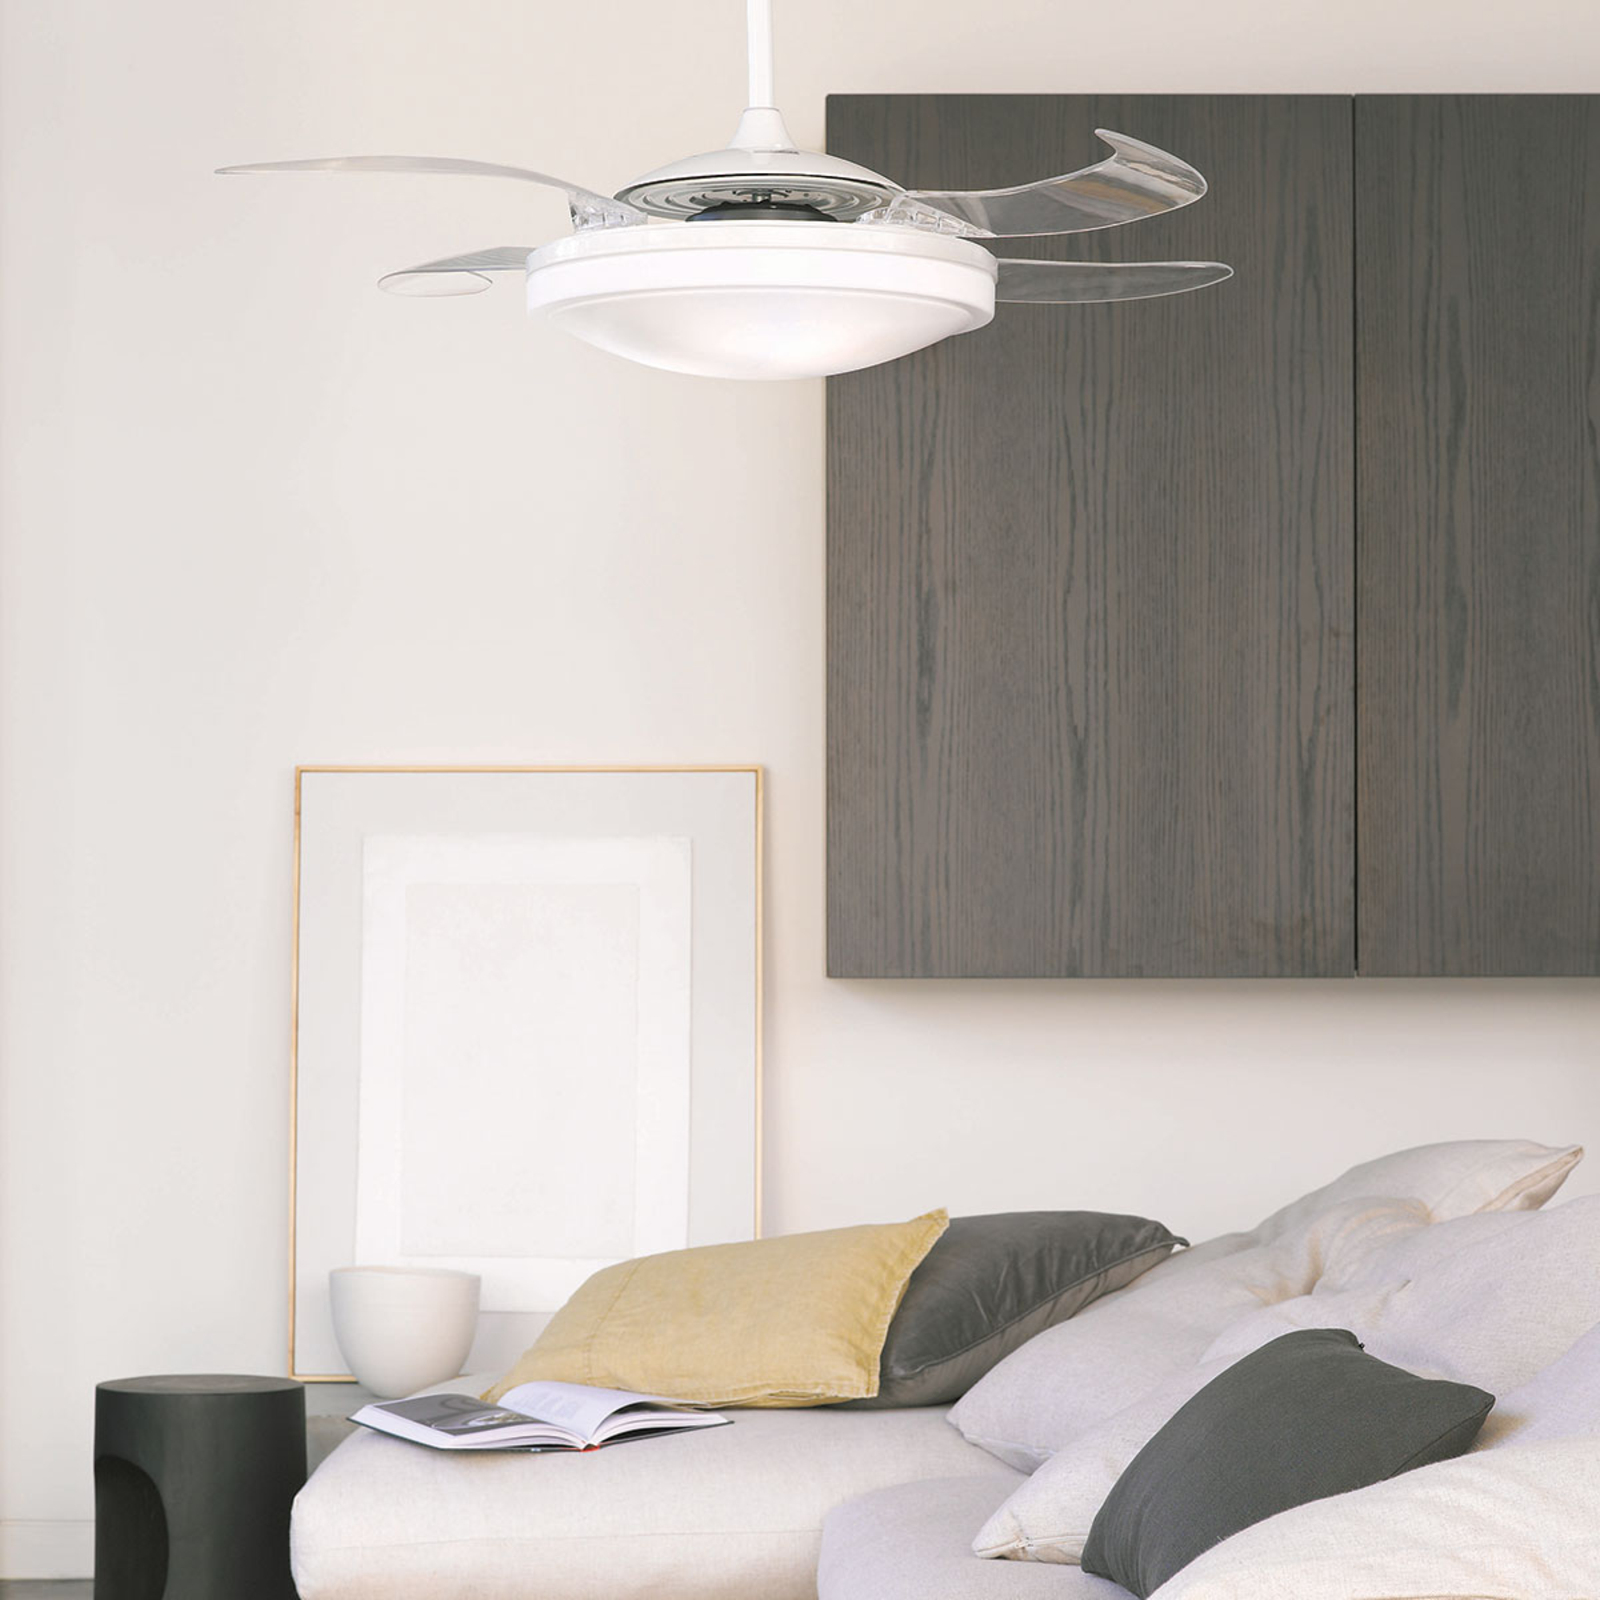 White Fanaway Evo 1 LED ceiling fan with light